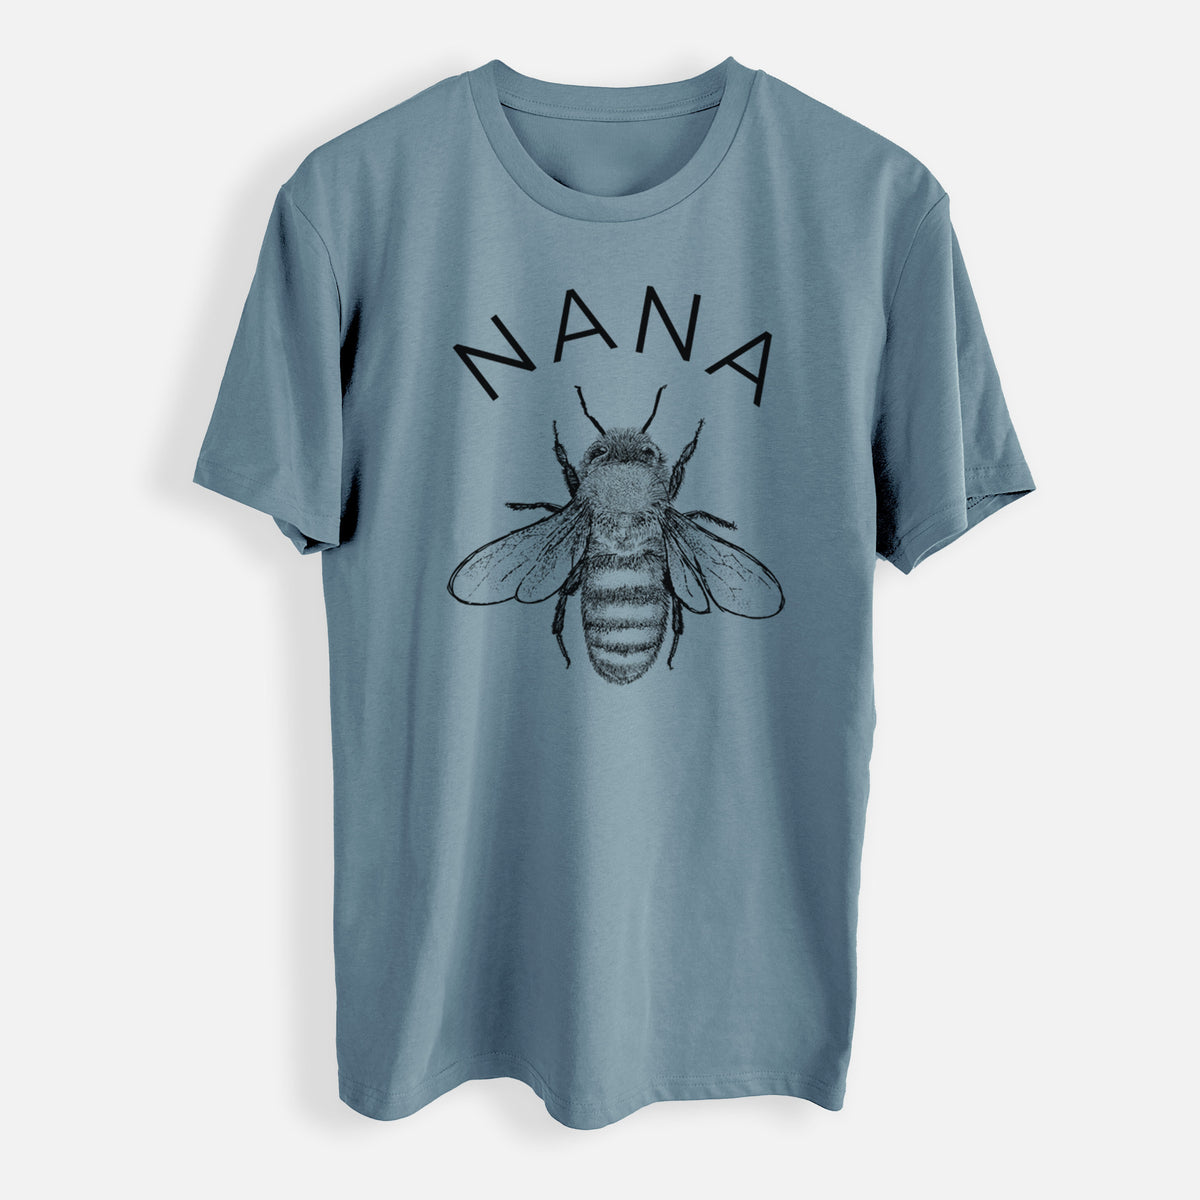 Nana Bee - Mens Everyday Staple Tee